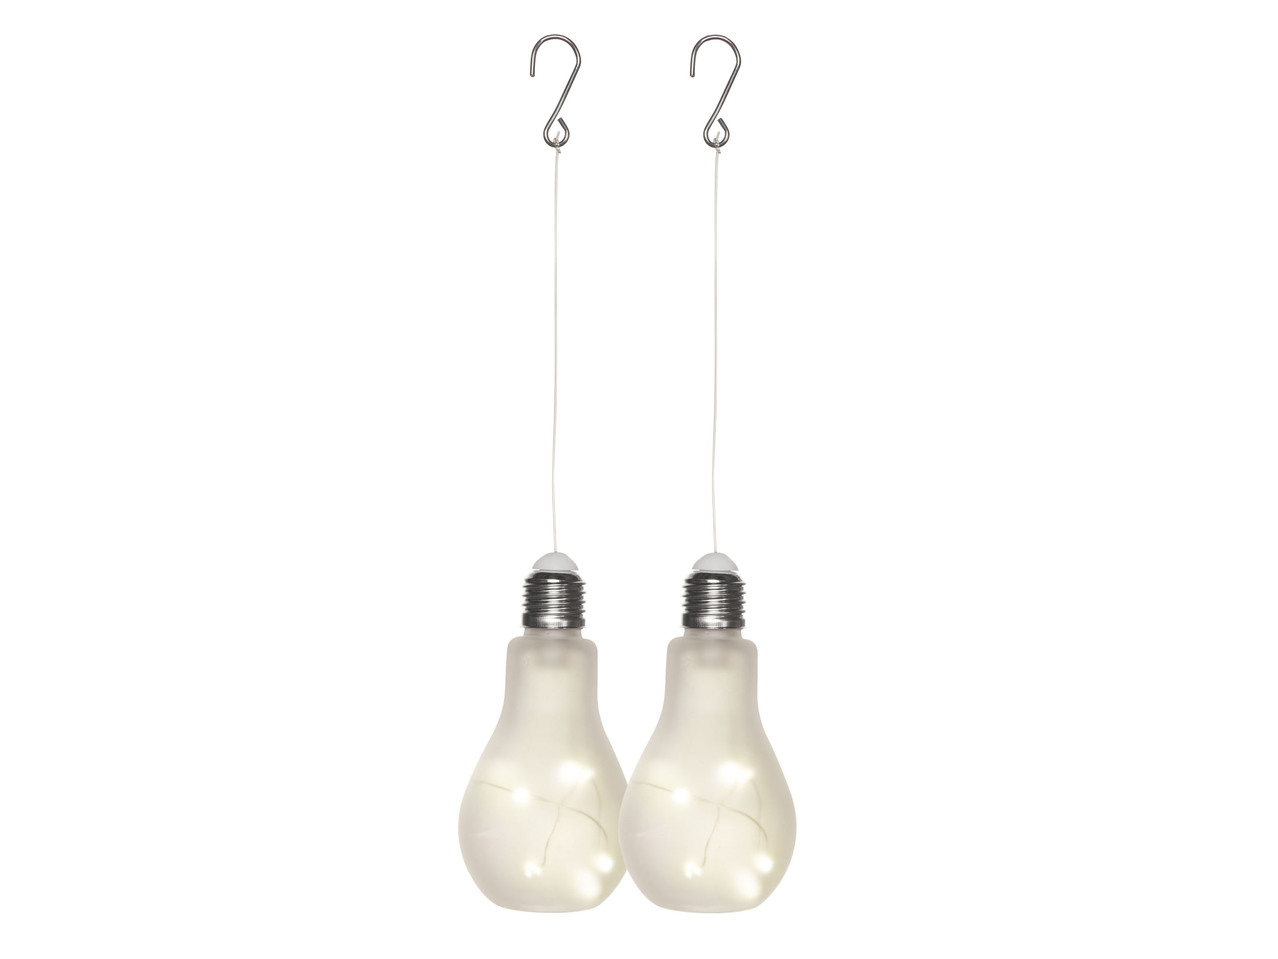 LED light Bulb Ornaments, 1 or 2 pieces